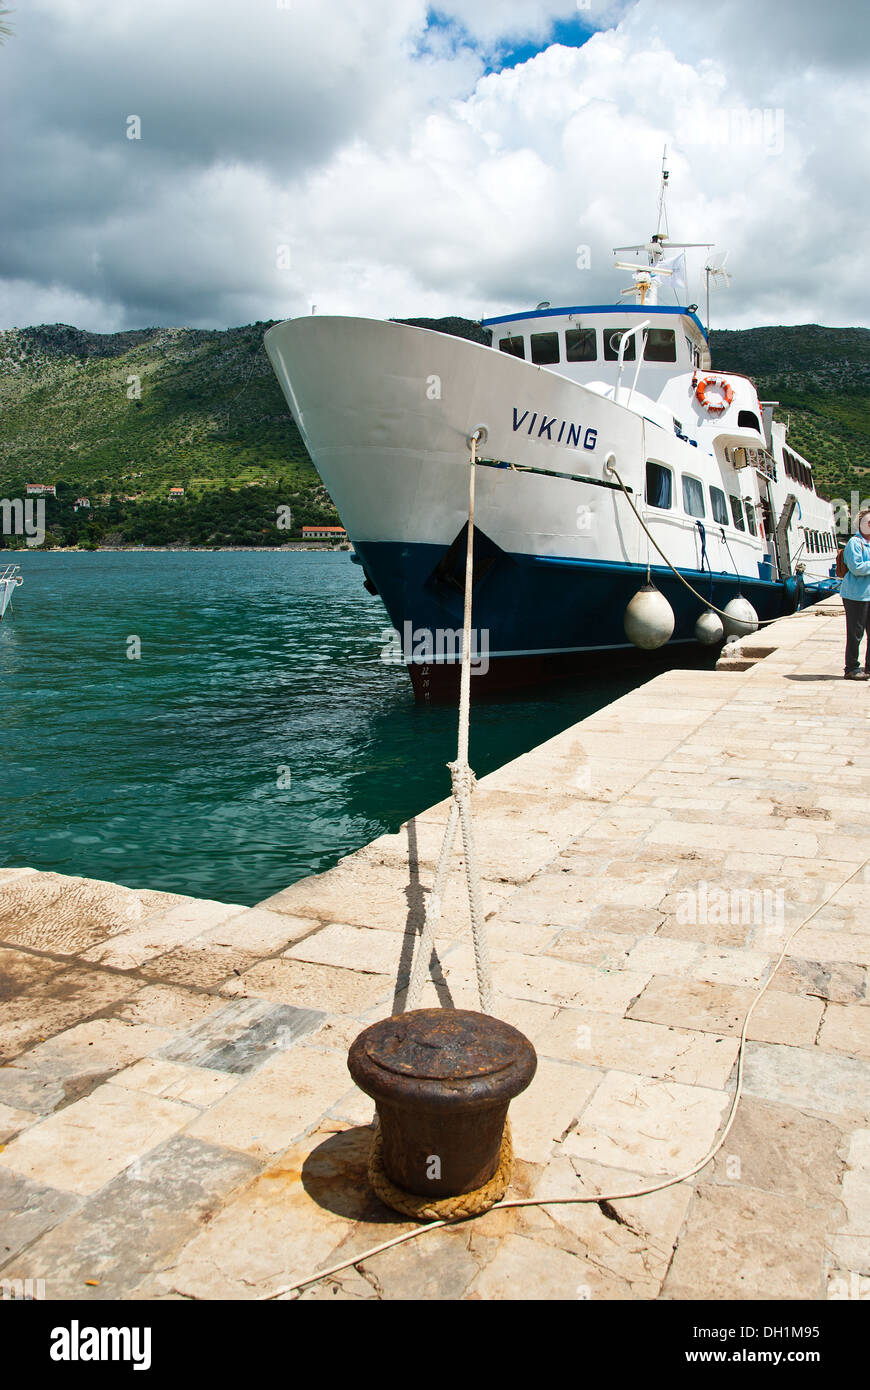 The Lopud ferry (Viking) moored on the Lapad Peninsular, Croatia. Stock Photo